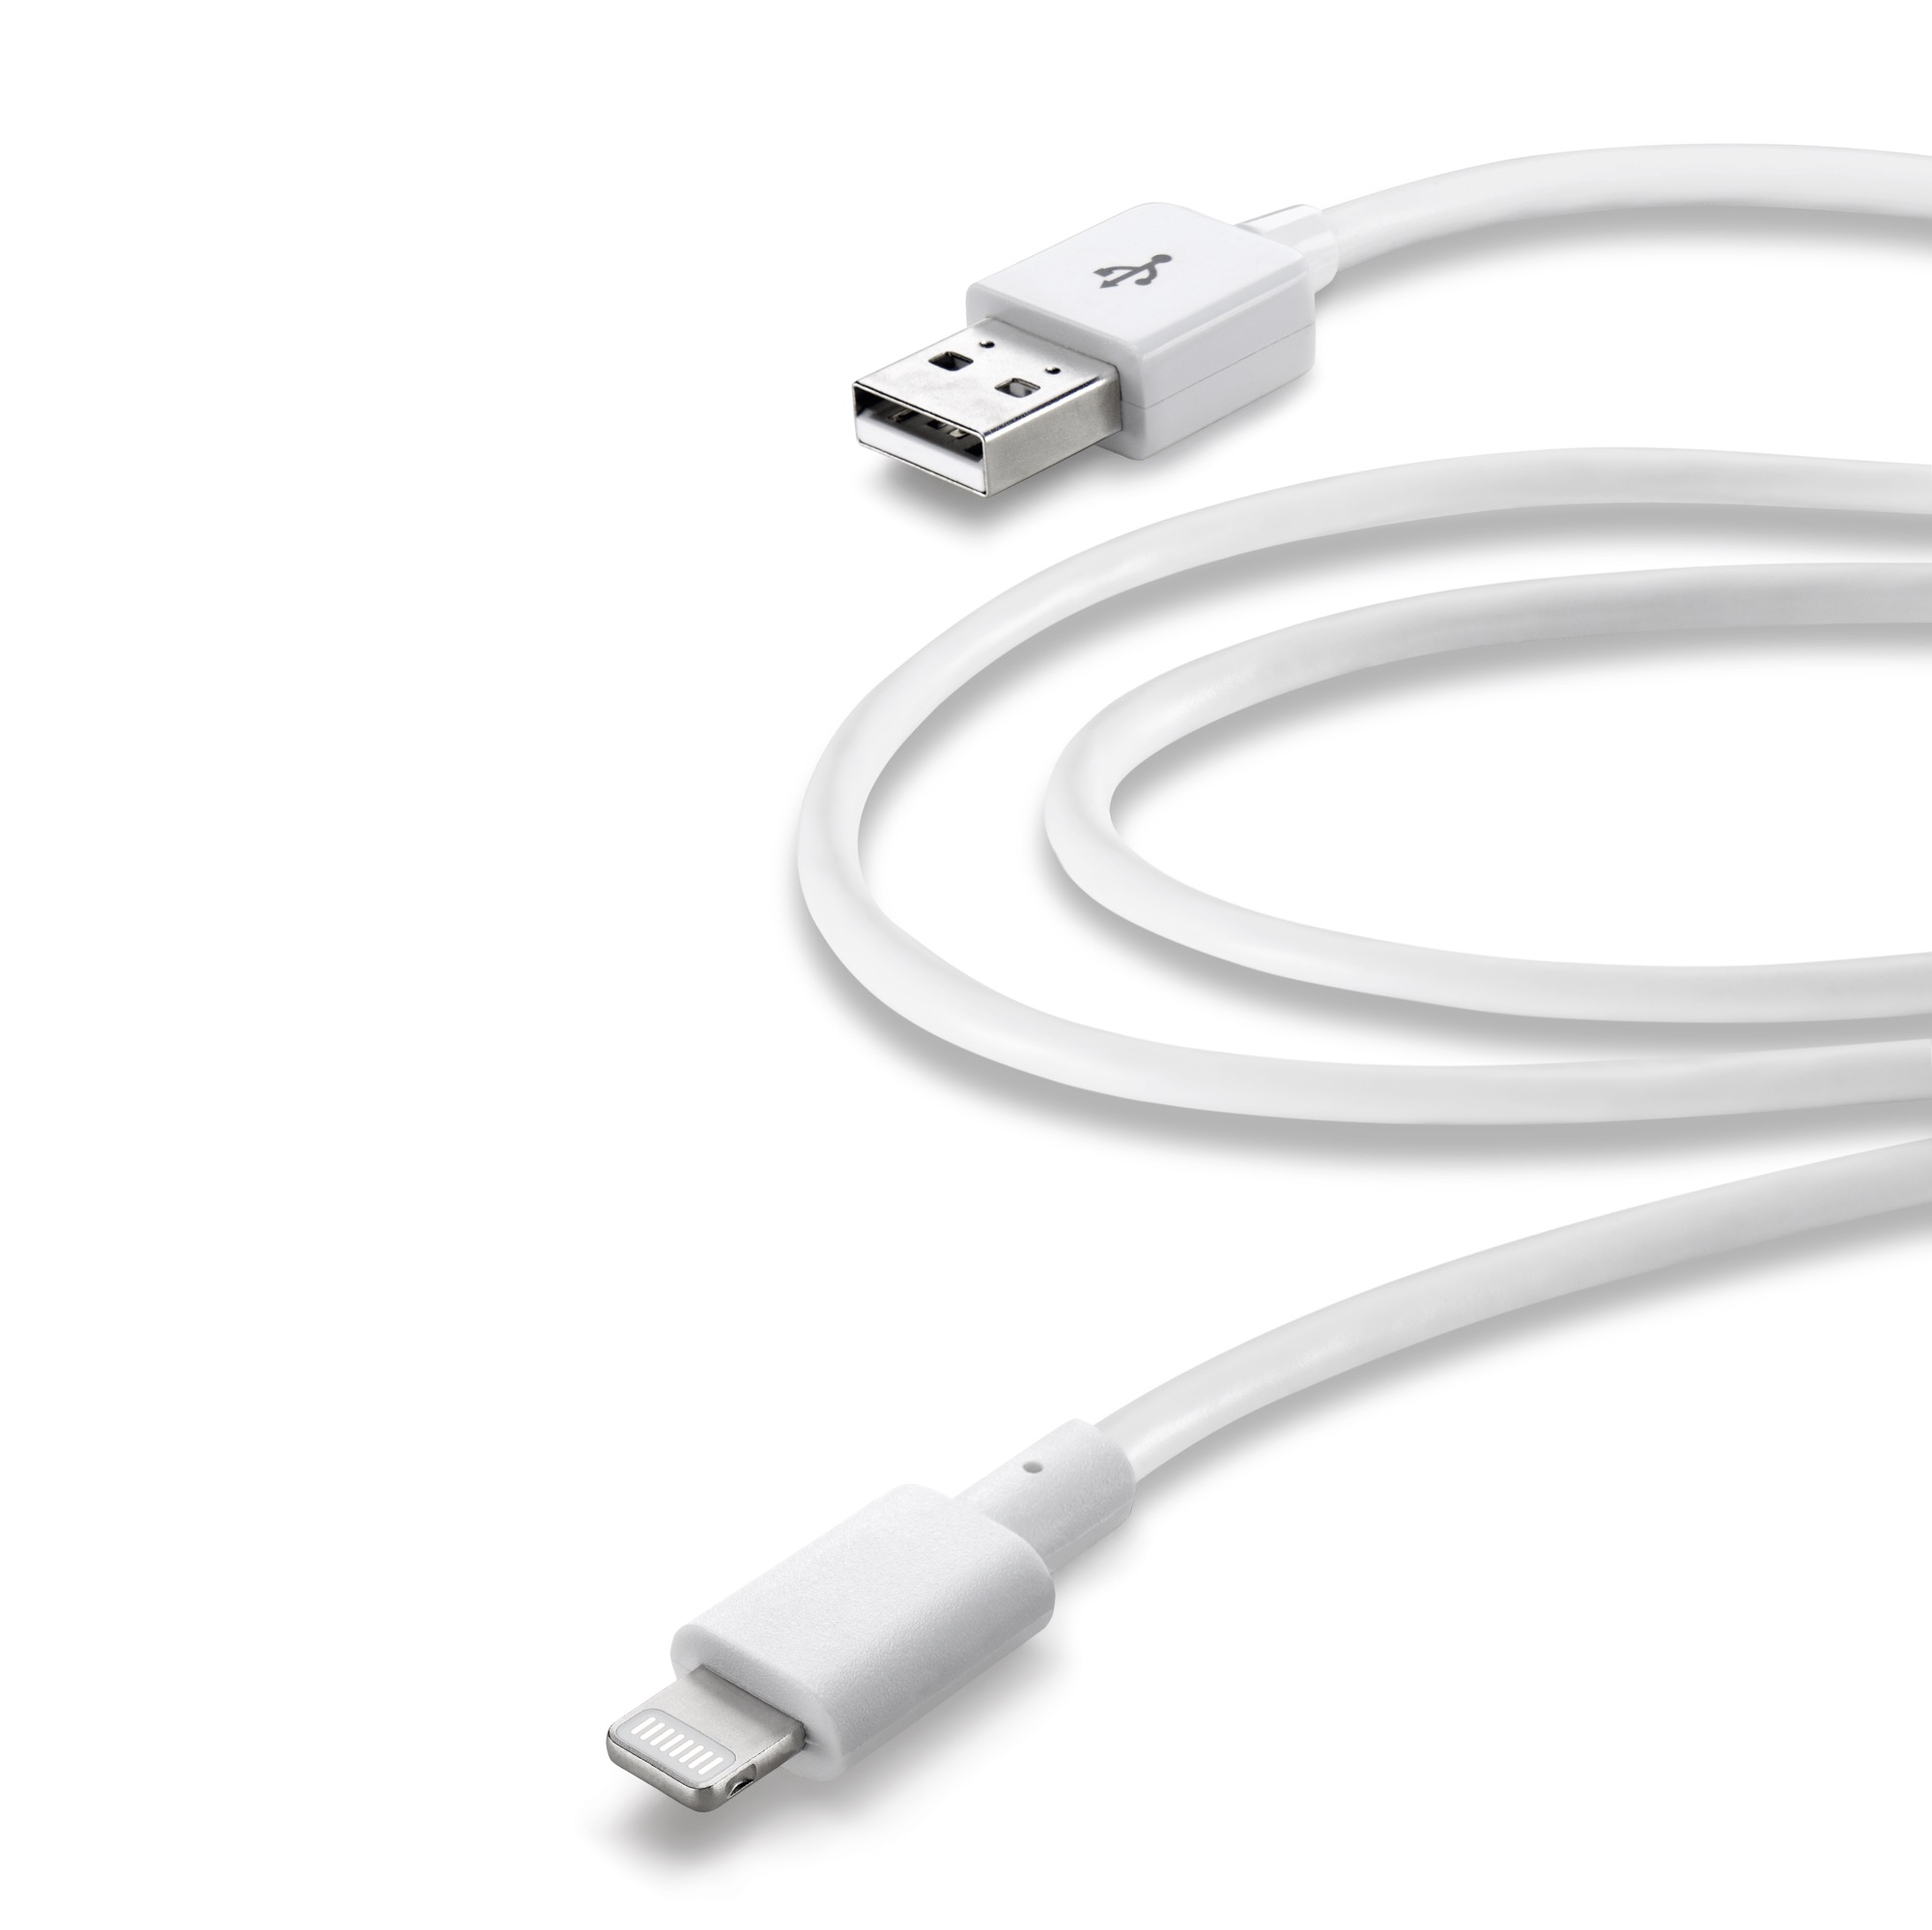 Usb cable, Apple lightning 3m, white